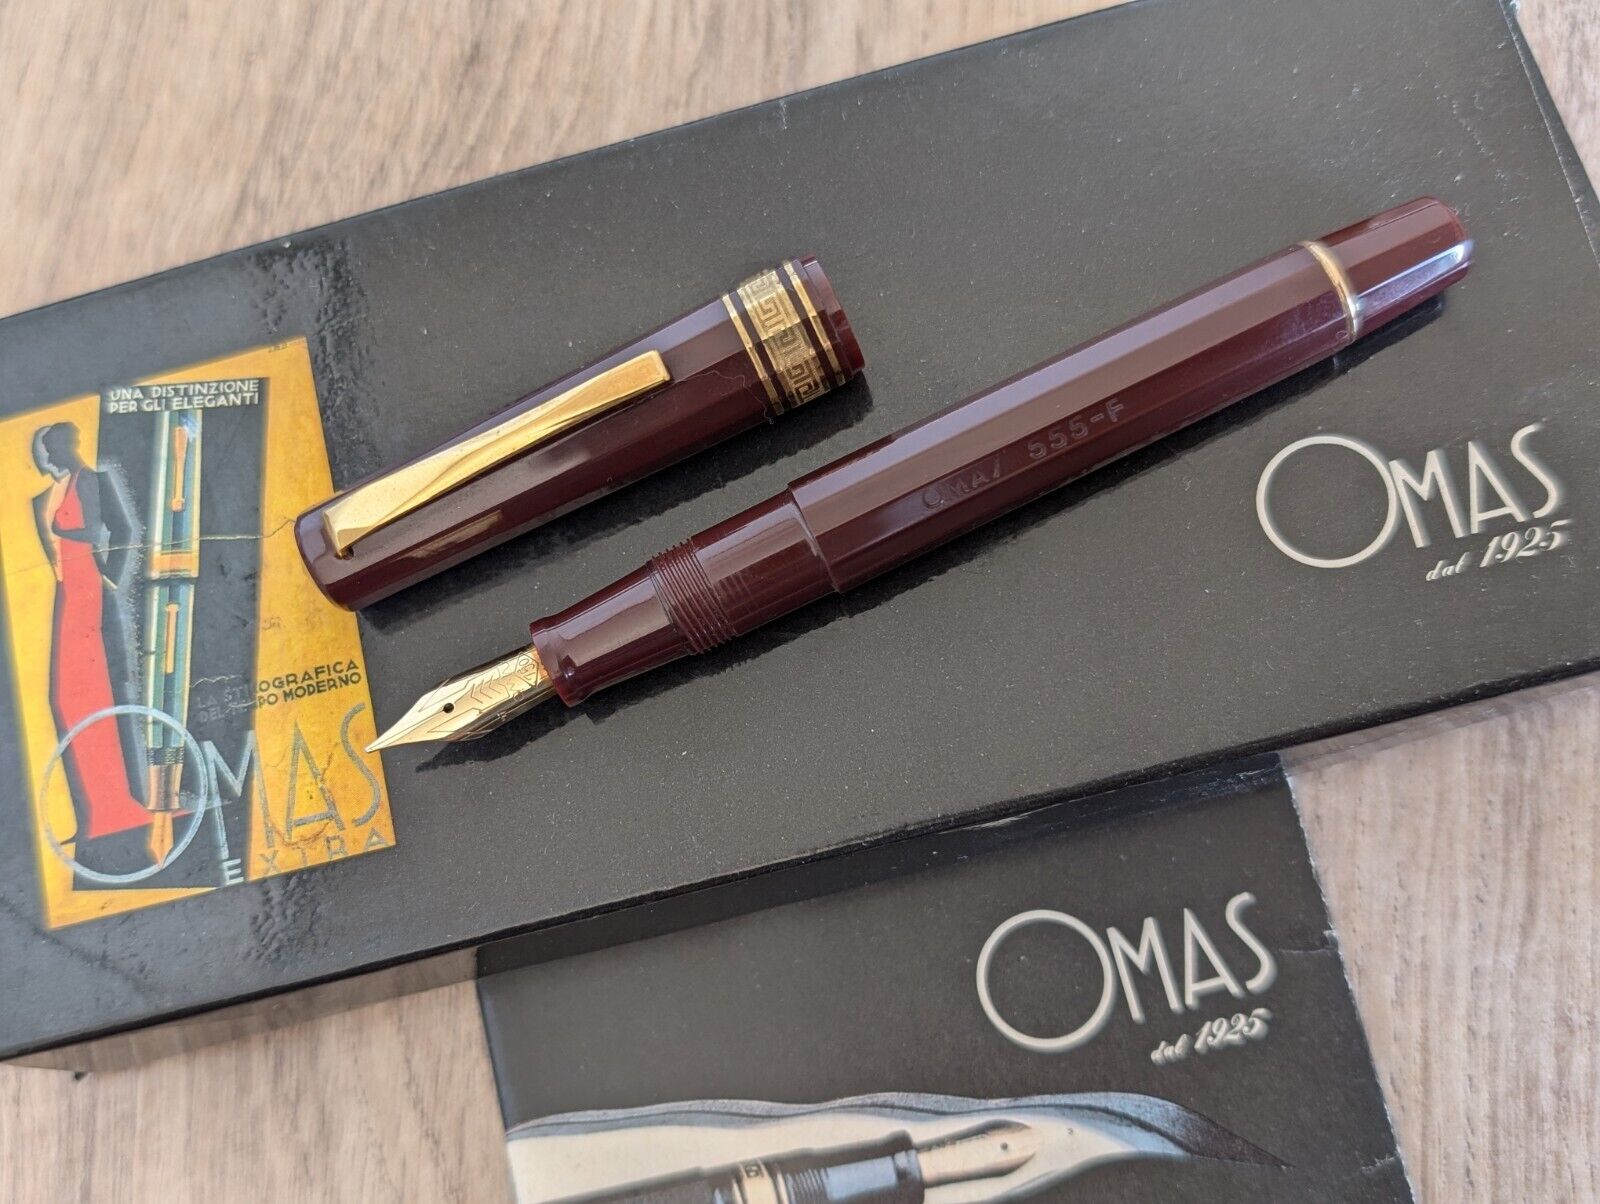 OMAS 555-F Small Piston Fill Fountain Pen - Gold 18K-750 (F) Nib - NOS